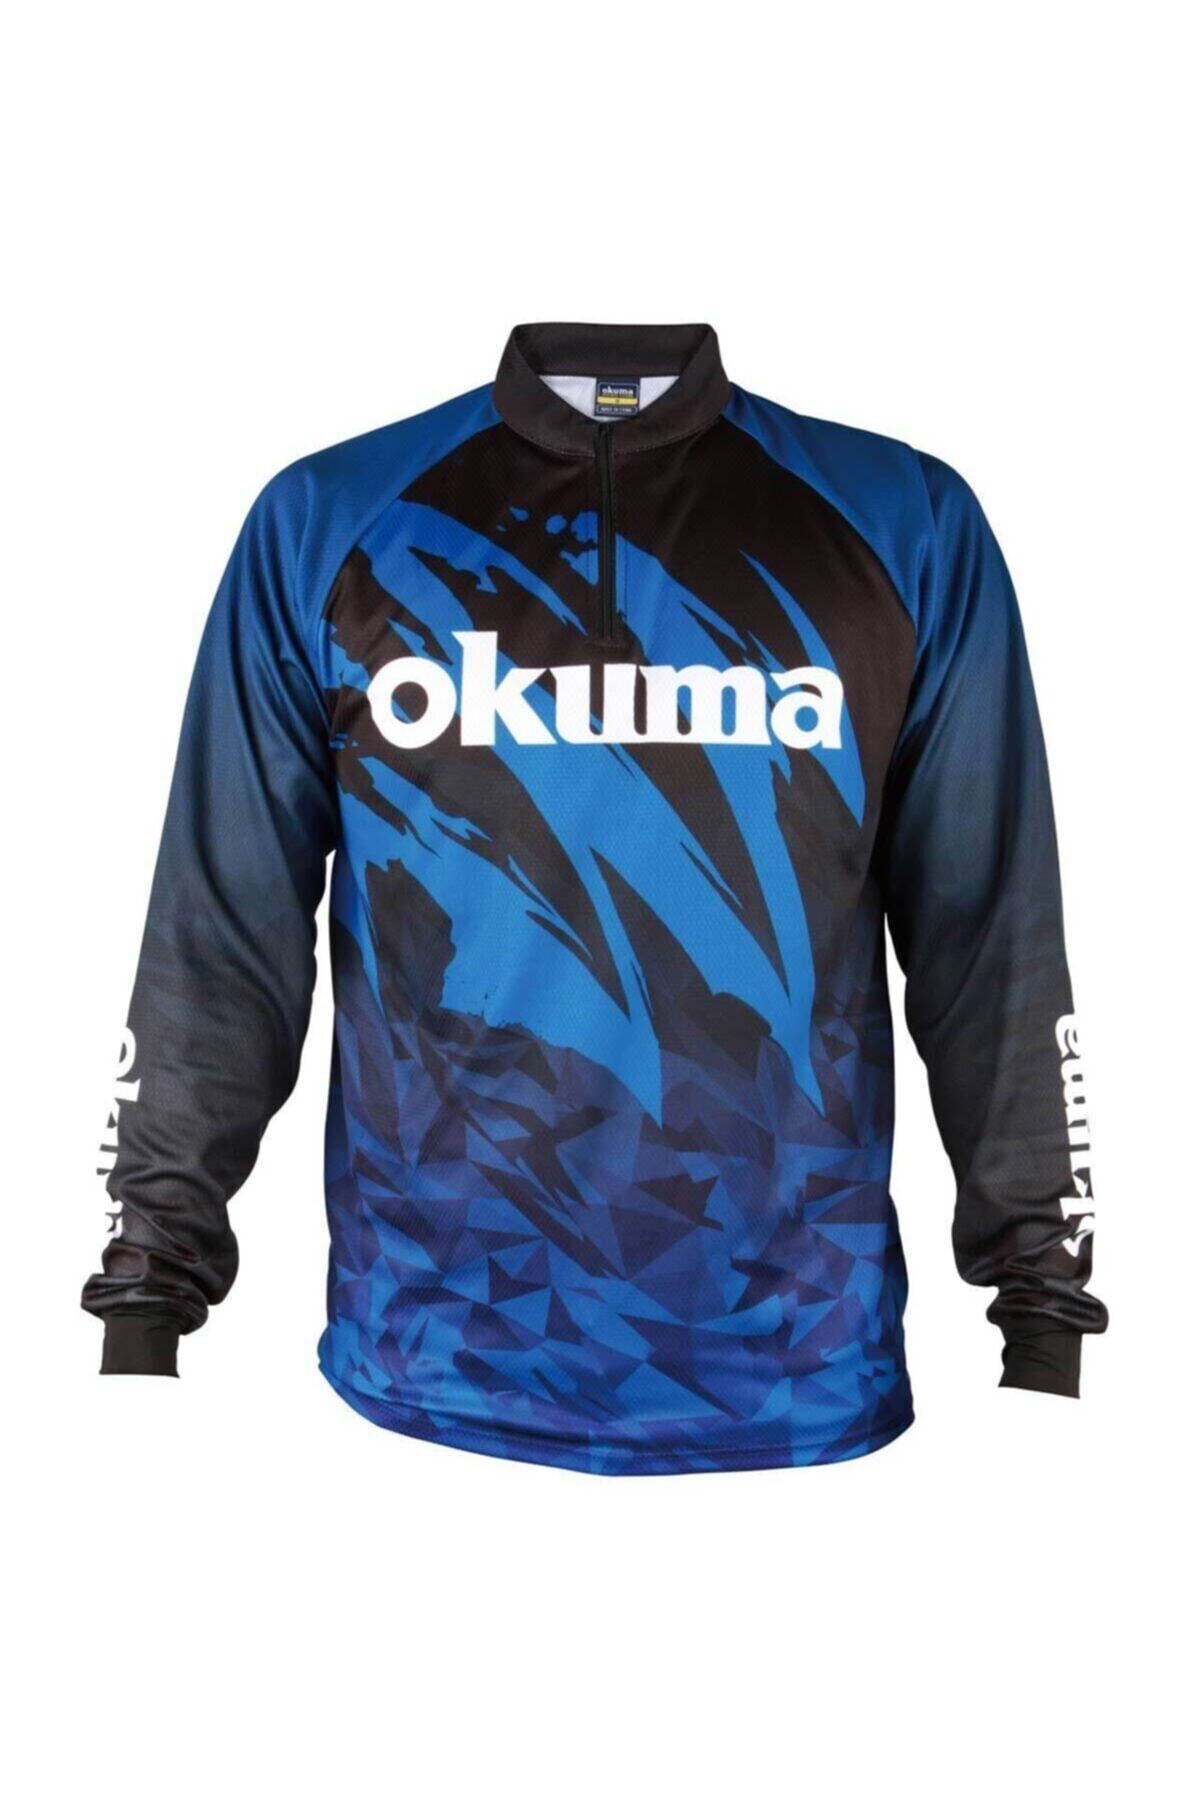 Okuma Motif Tournament Jersey Shirt